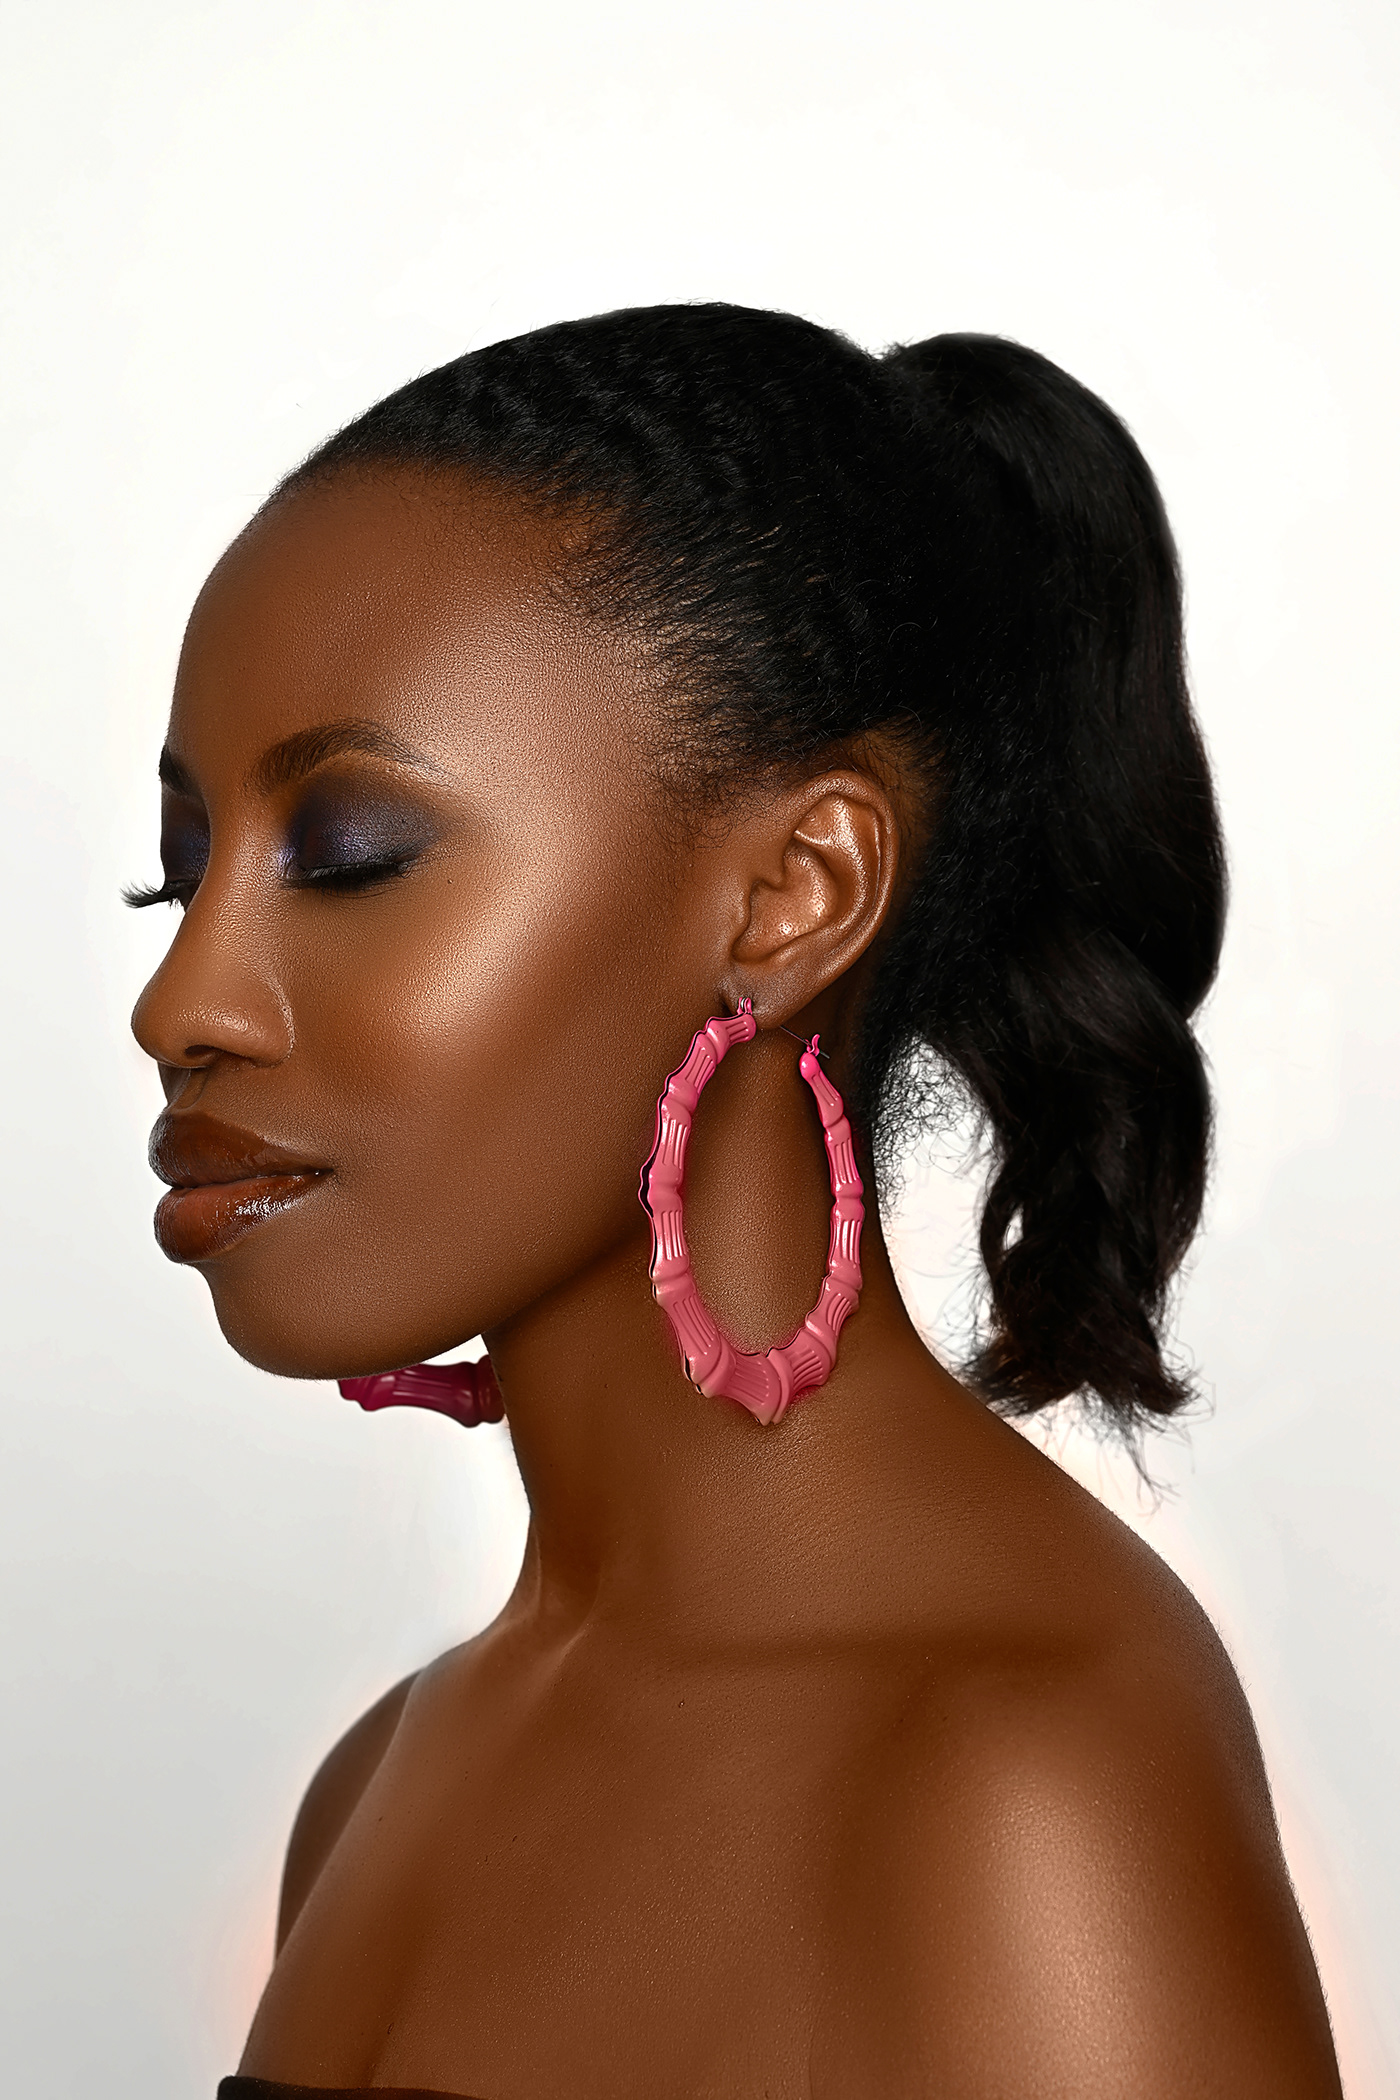 Skin retouching beauty retouch Fashion  photoshoot retouch model beauty portrait